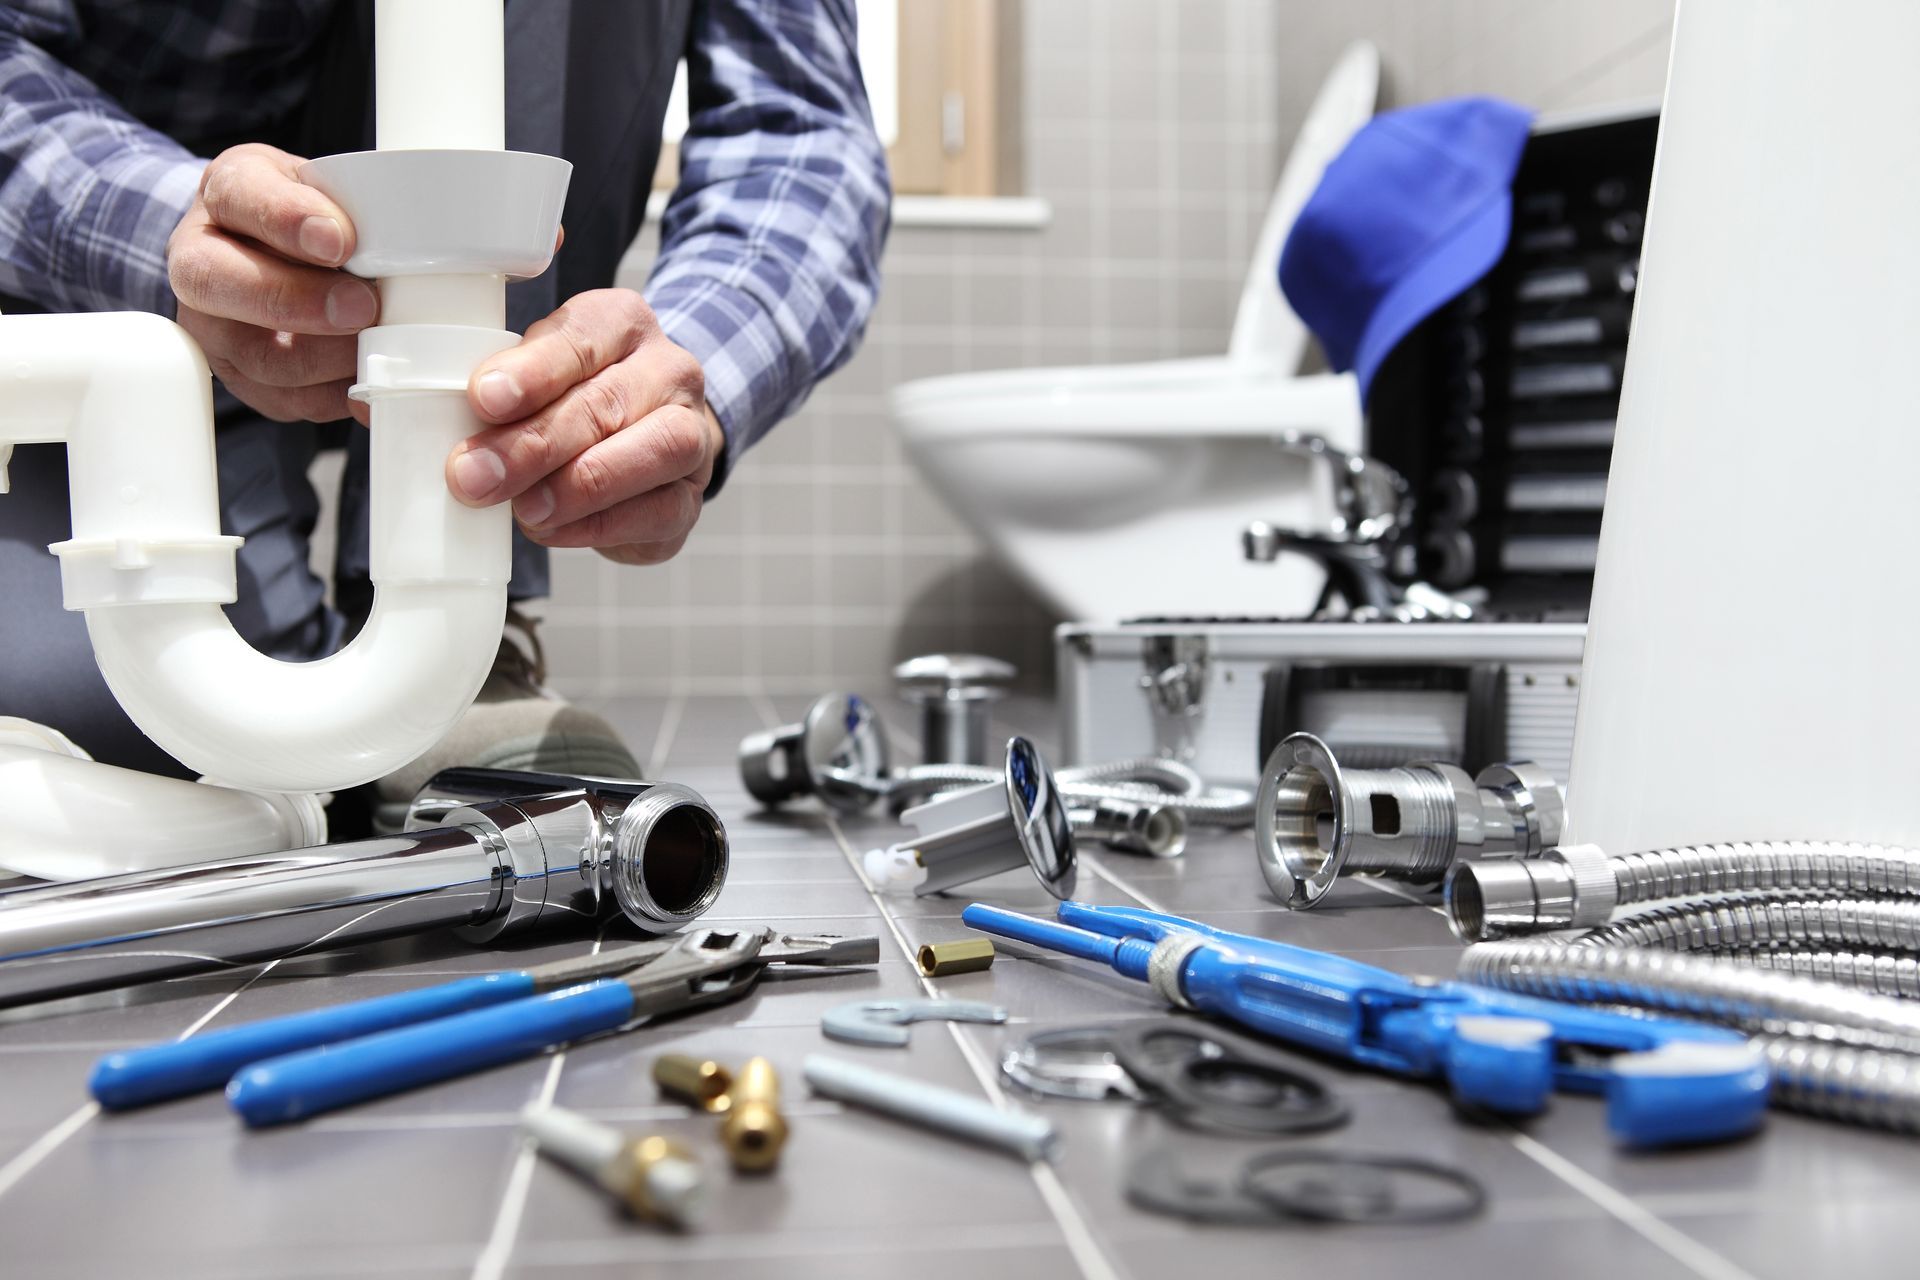 Alt Text: A handyman working in a bathroom, repairing plumbing issues.